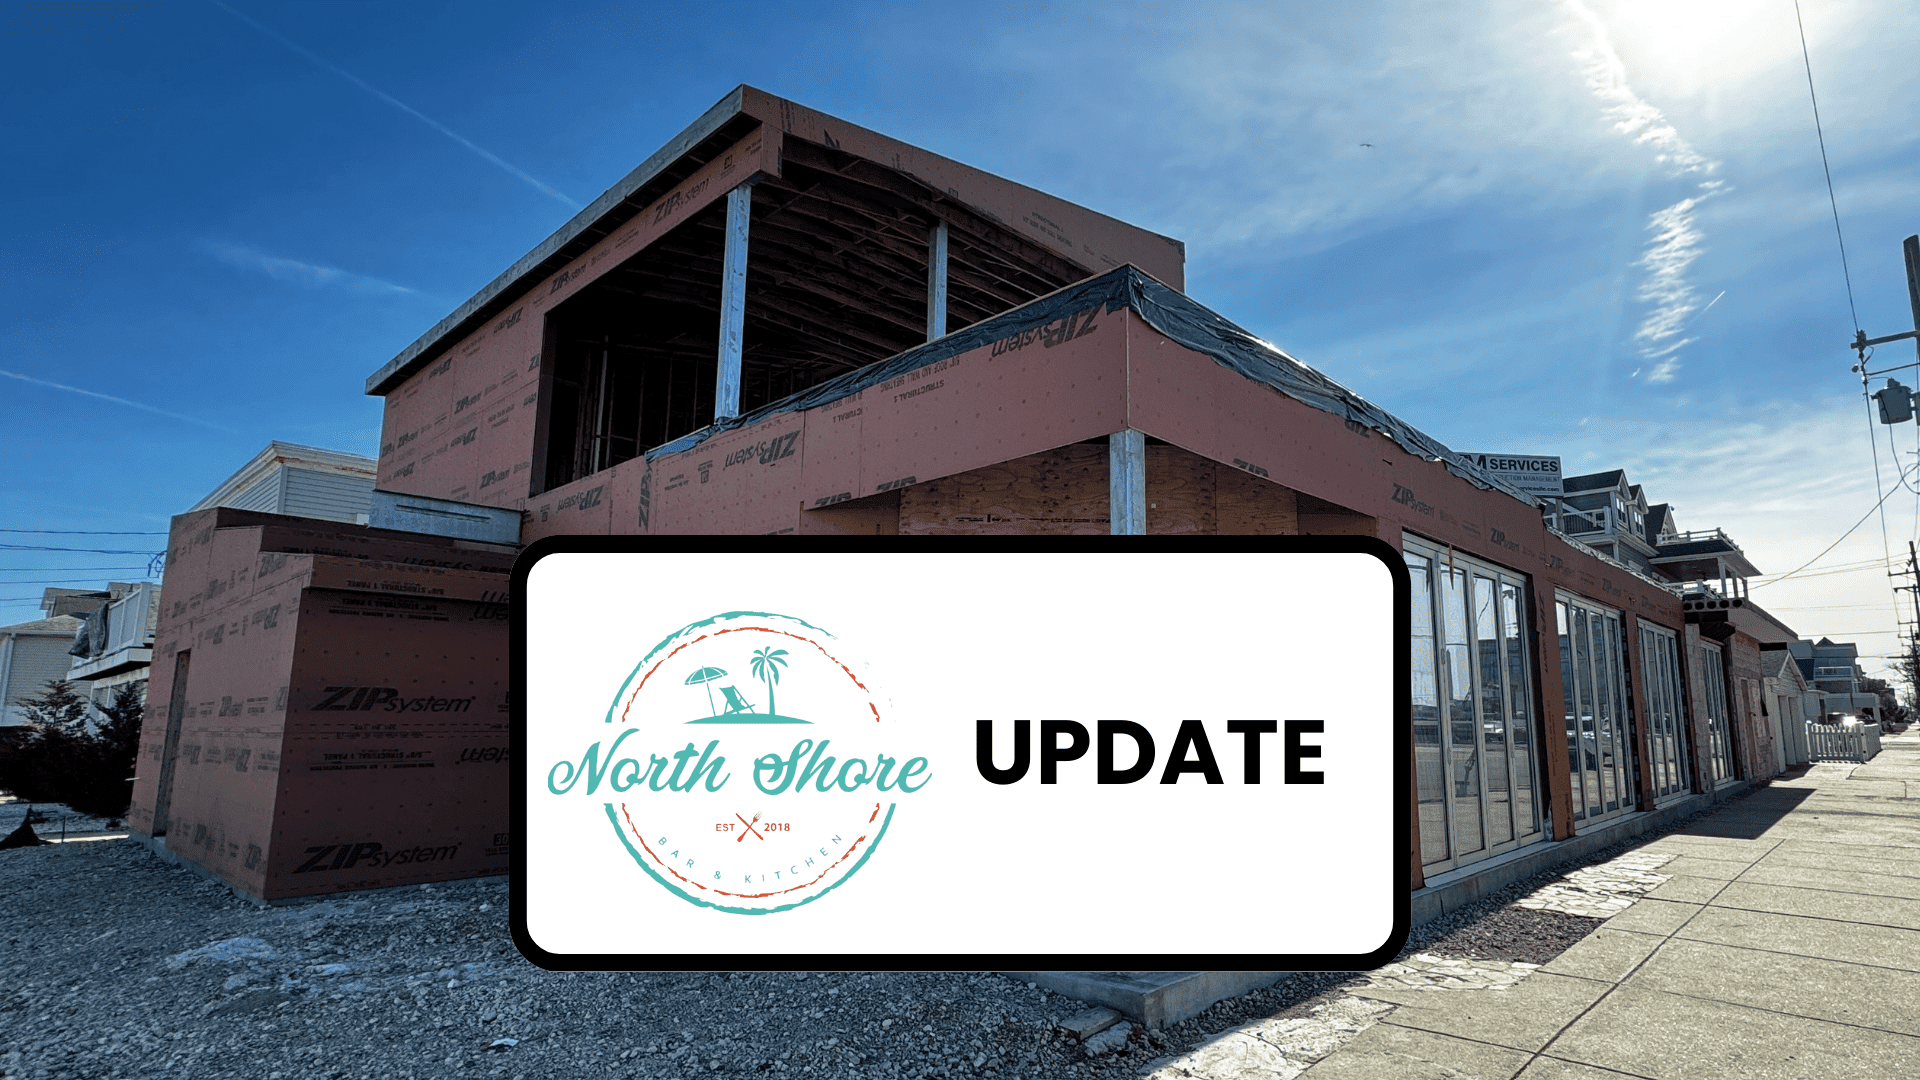 North Shore Bar & Kitchen Update on Future